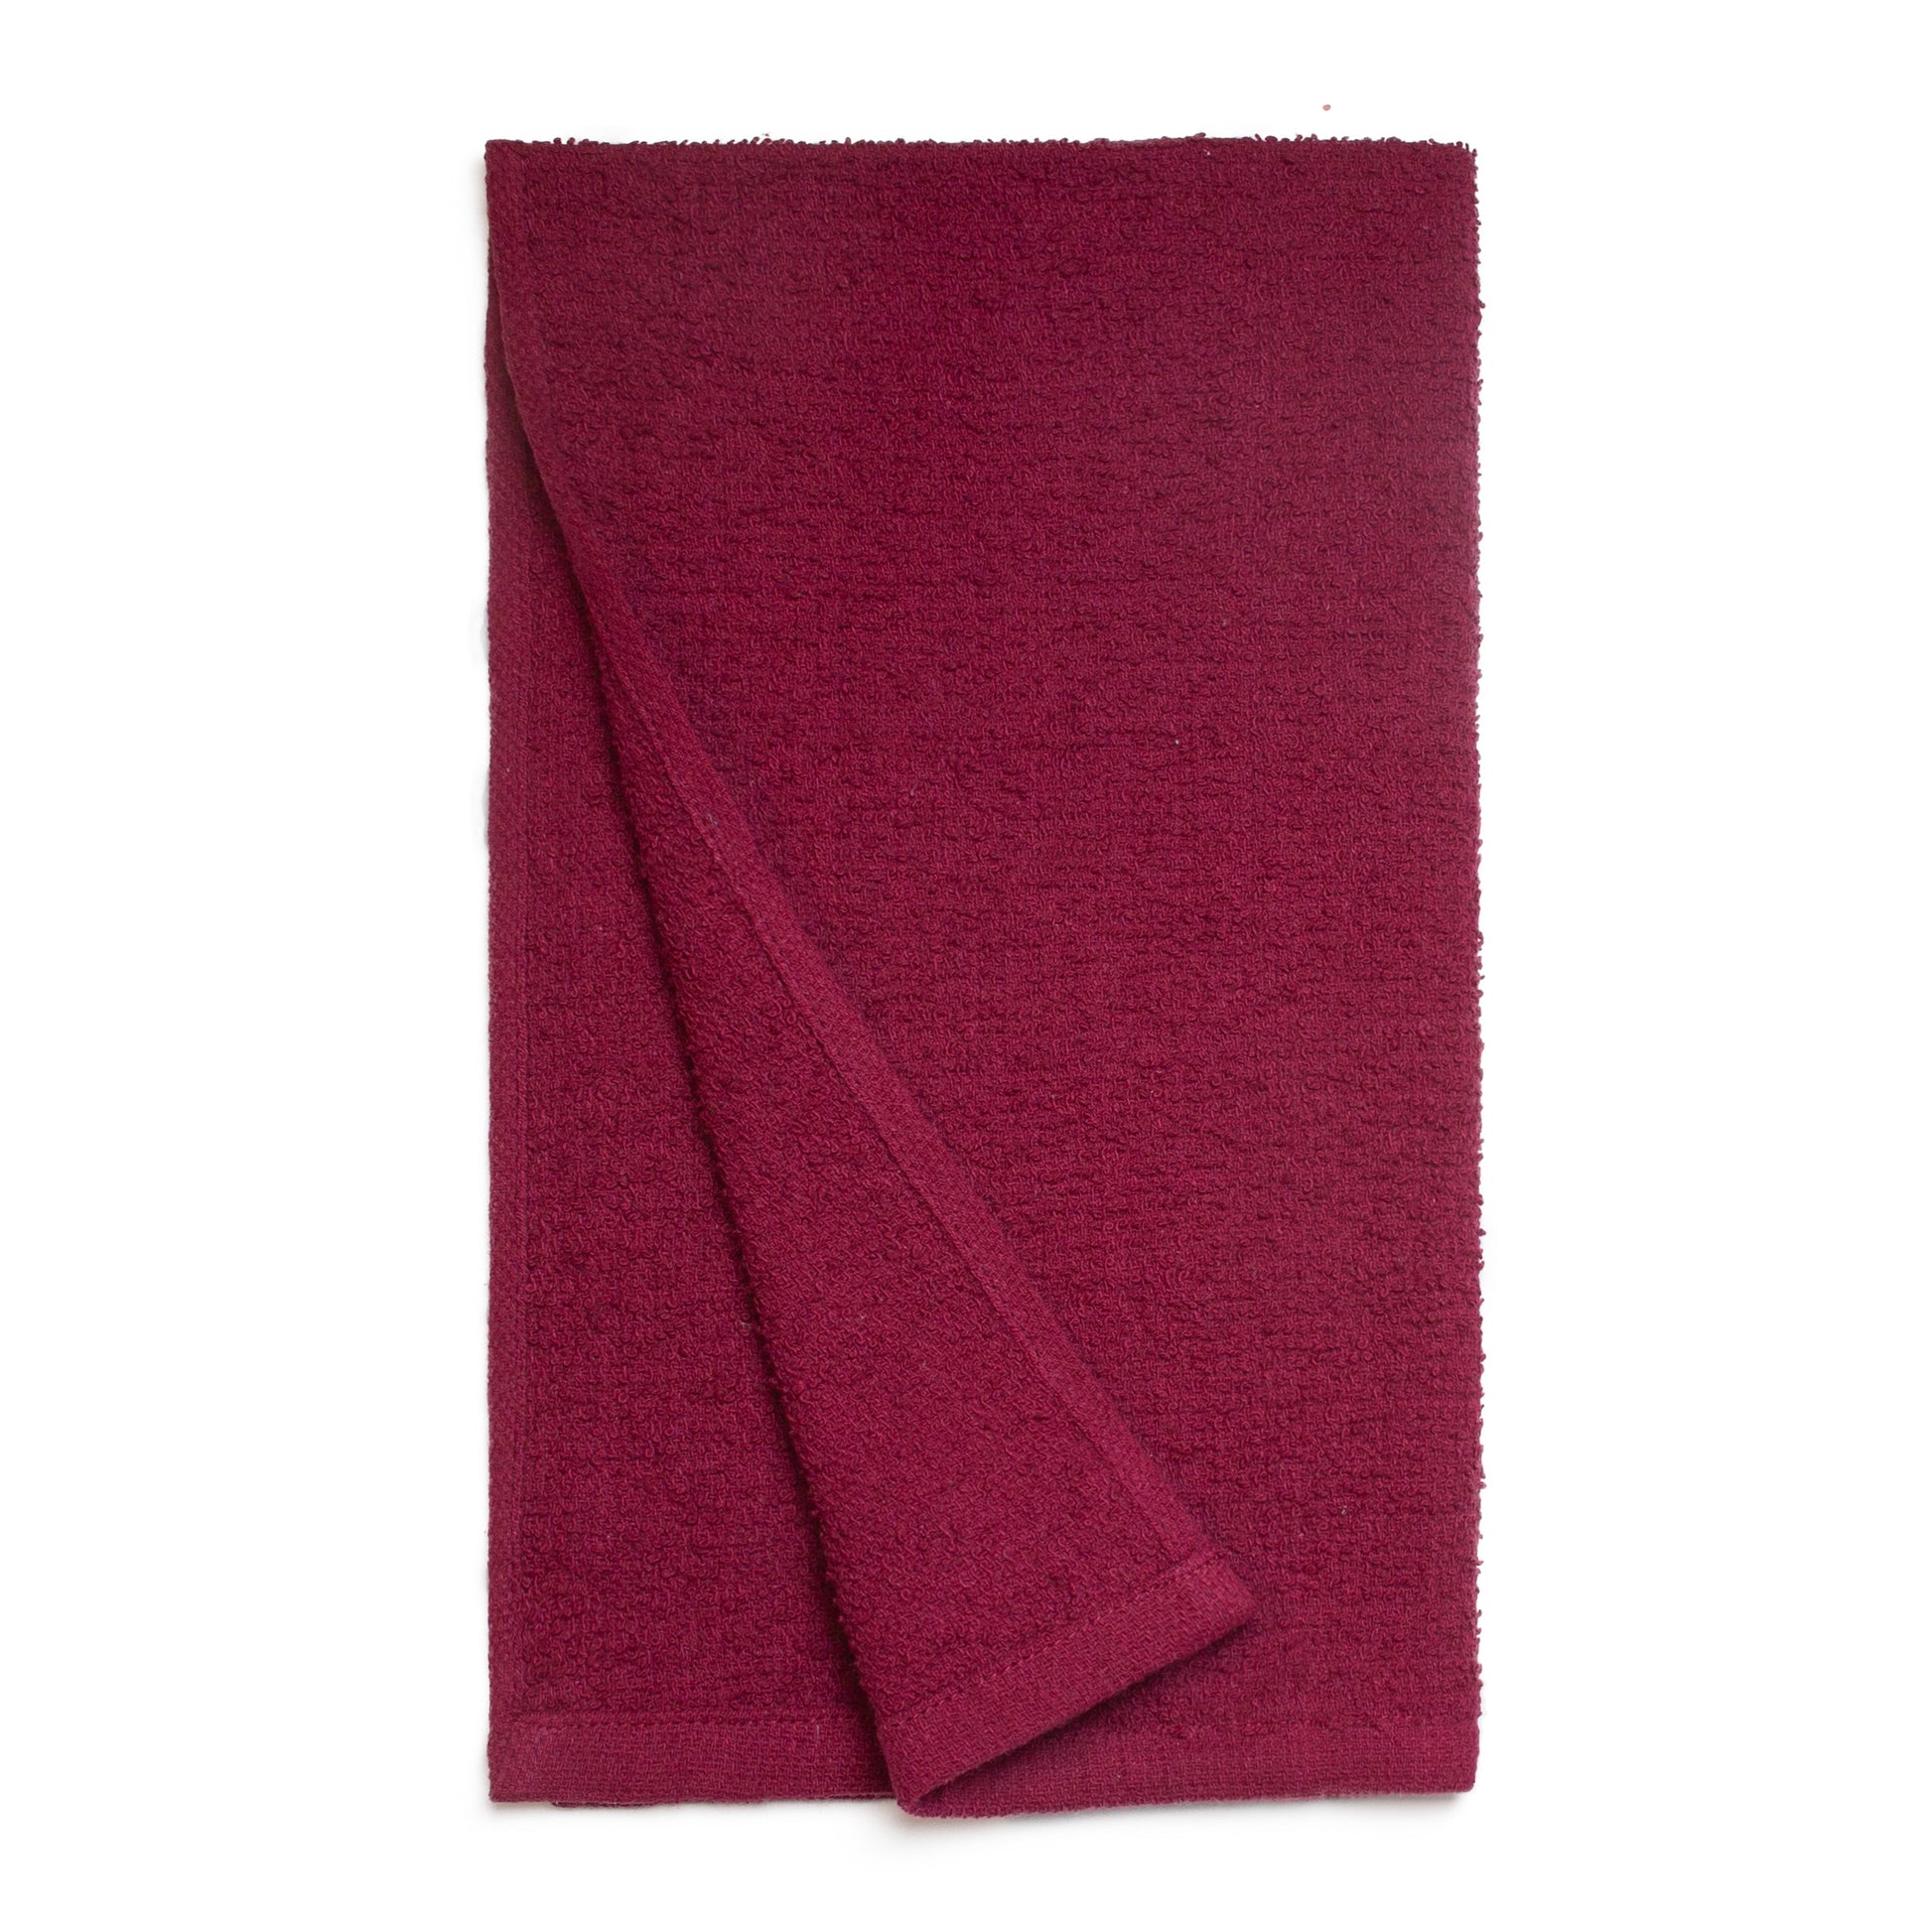 American Dawn | Burgundy 15X25 Inch Econo Neo Salon Towels